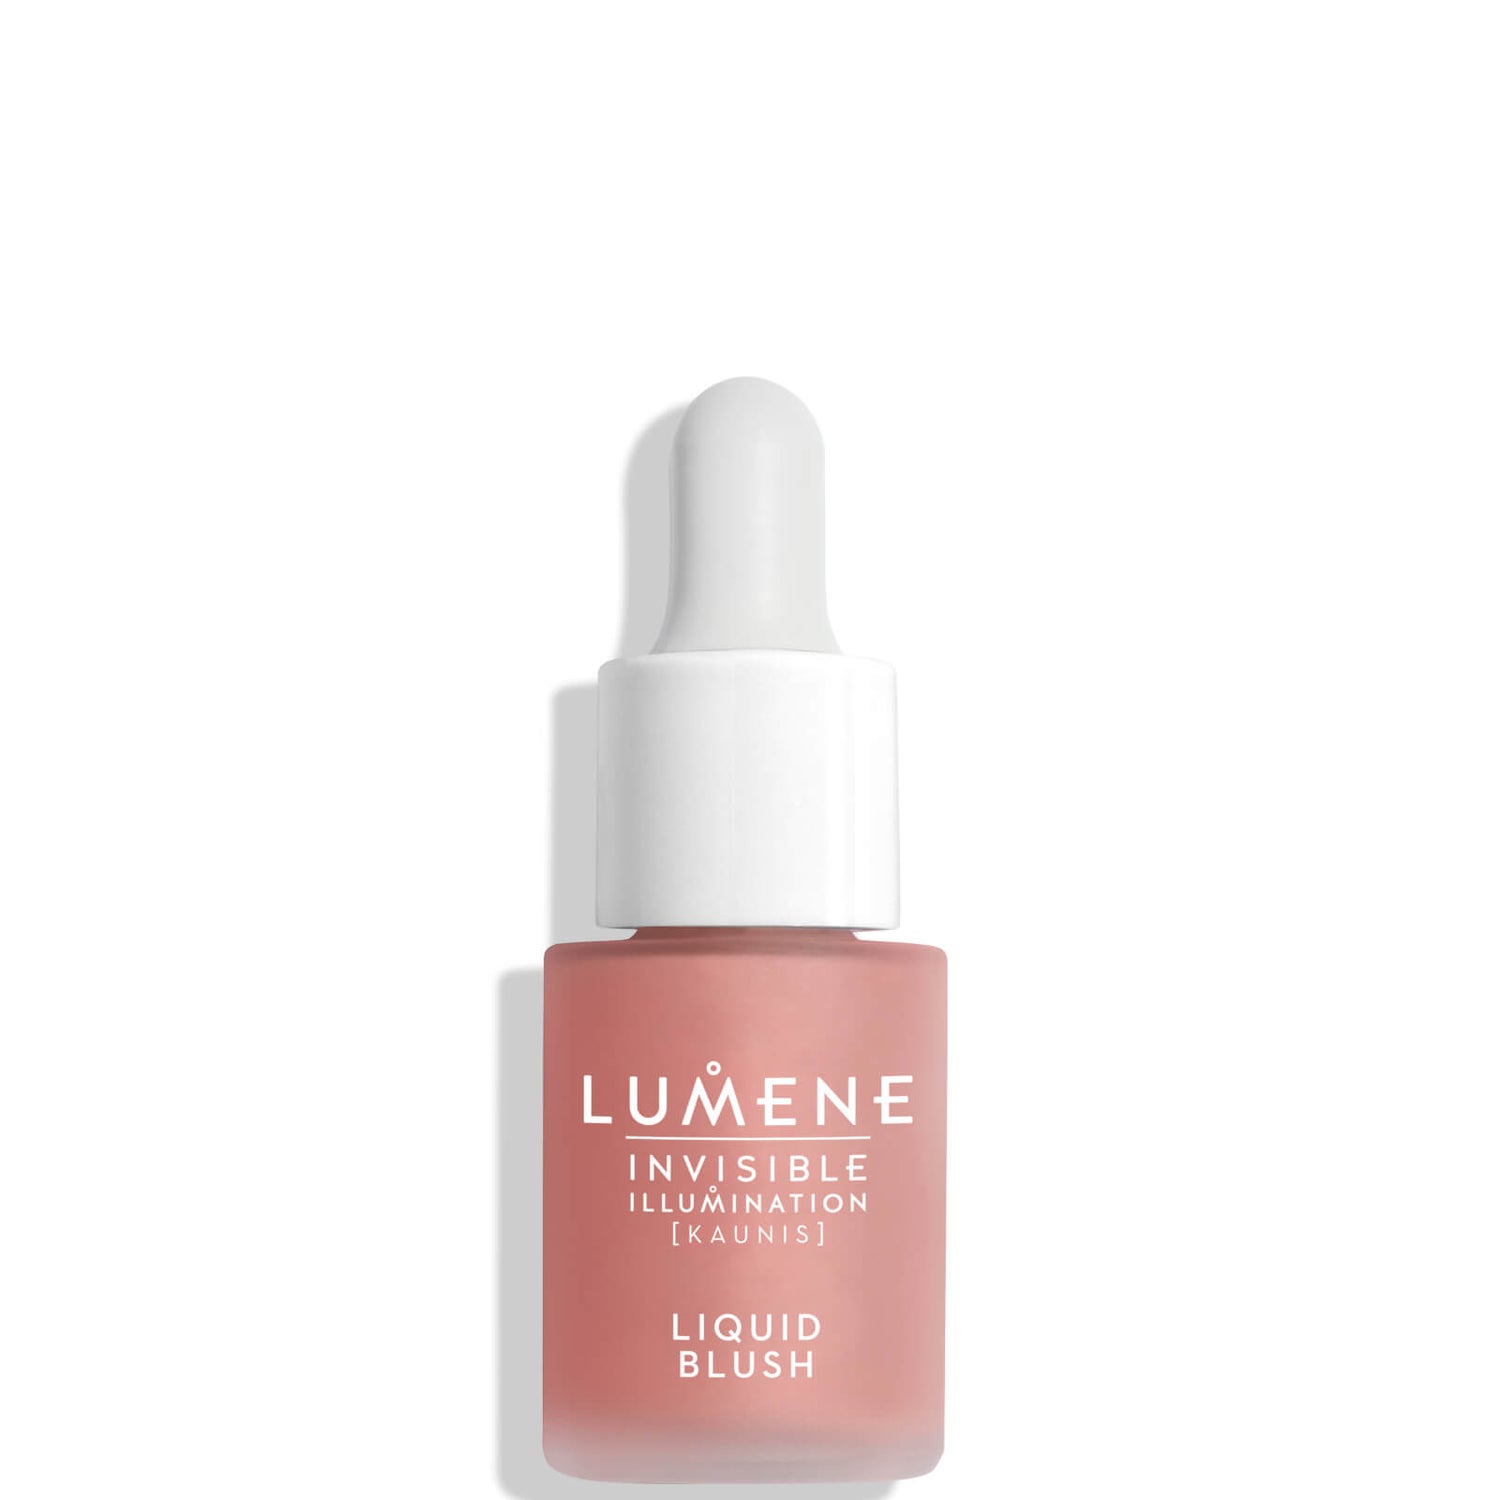 Lumene Invisible Illumination [KAUNIS] Blush - Pink Blossom 15ml